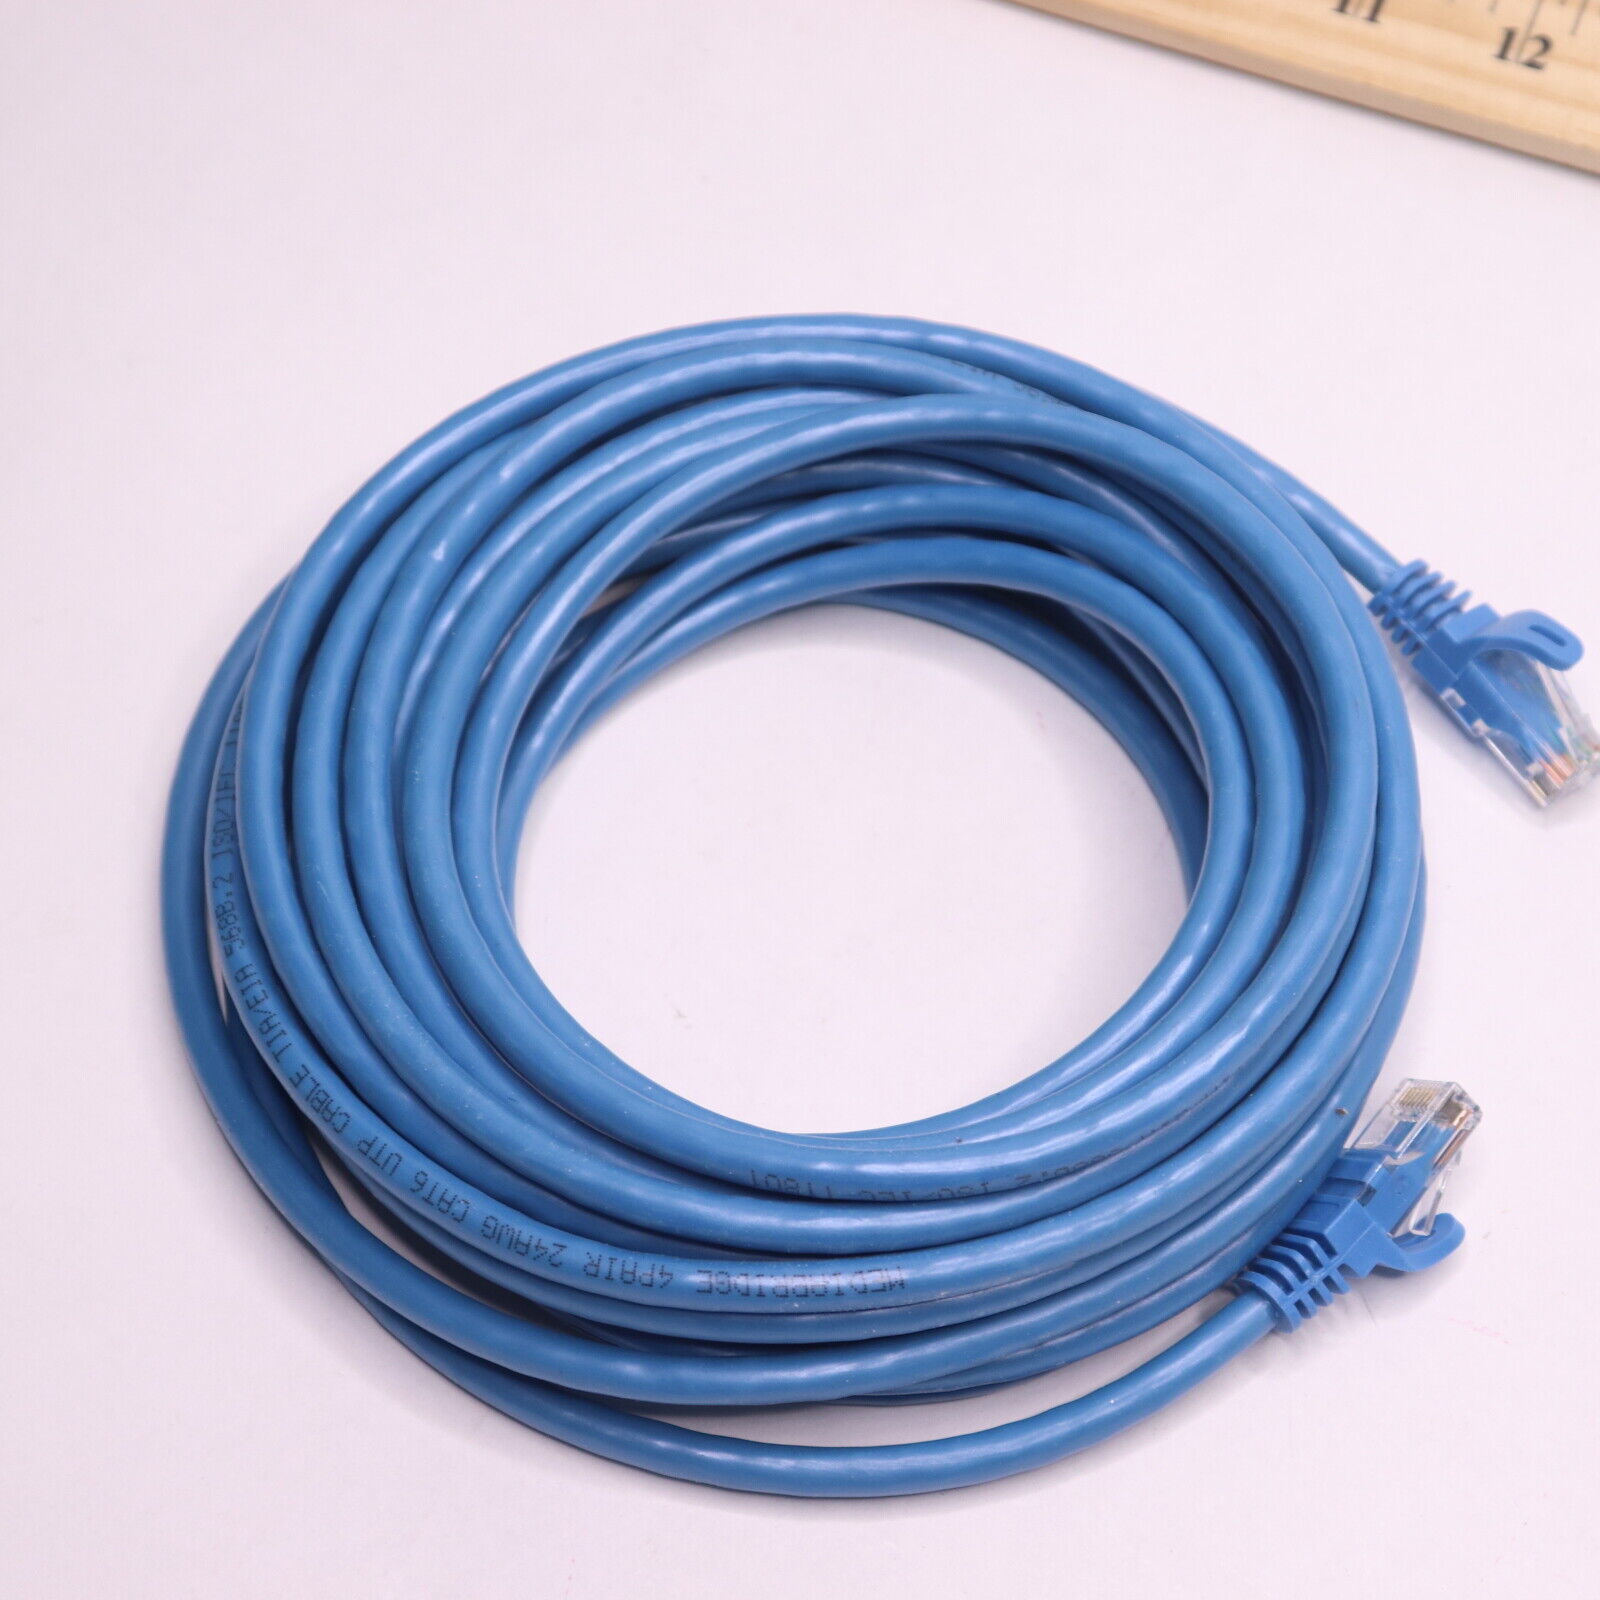 Mediabridge Ethernet Cable Cat6 Blue 25 Feet 31-399-25X